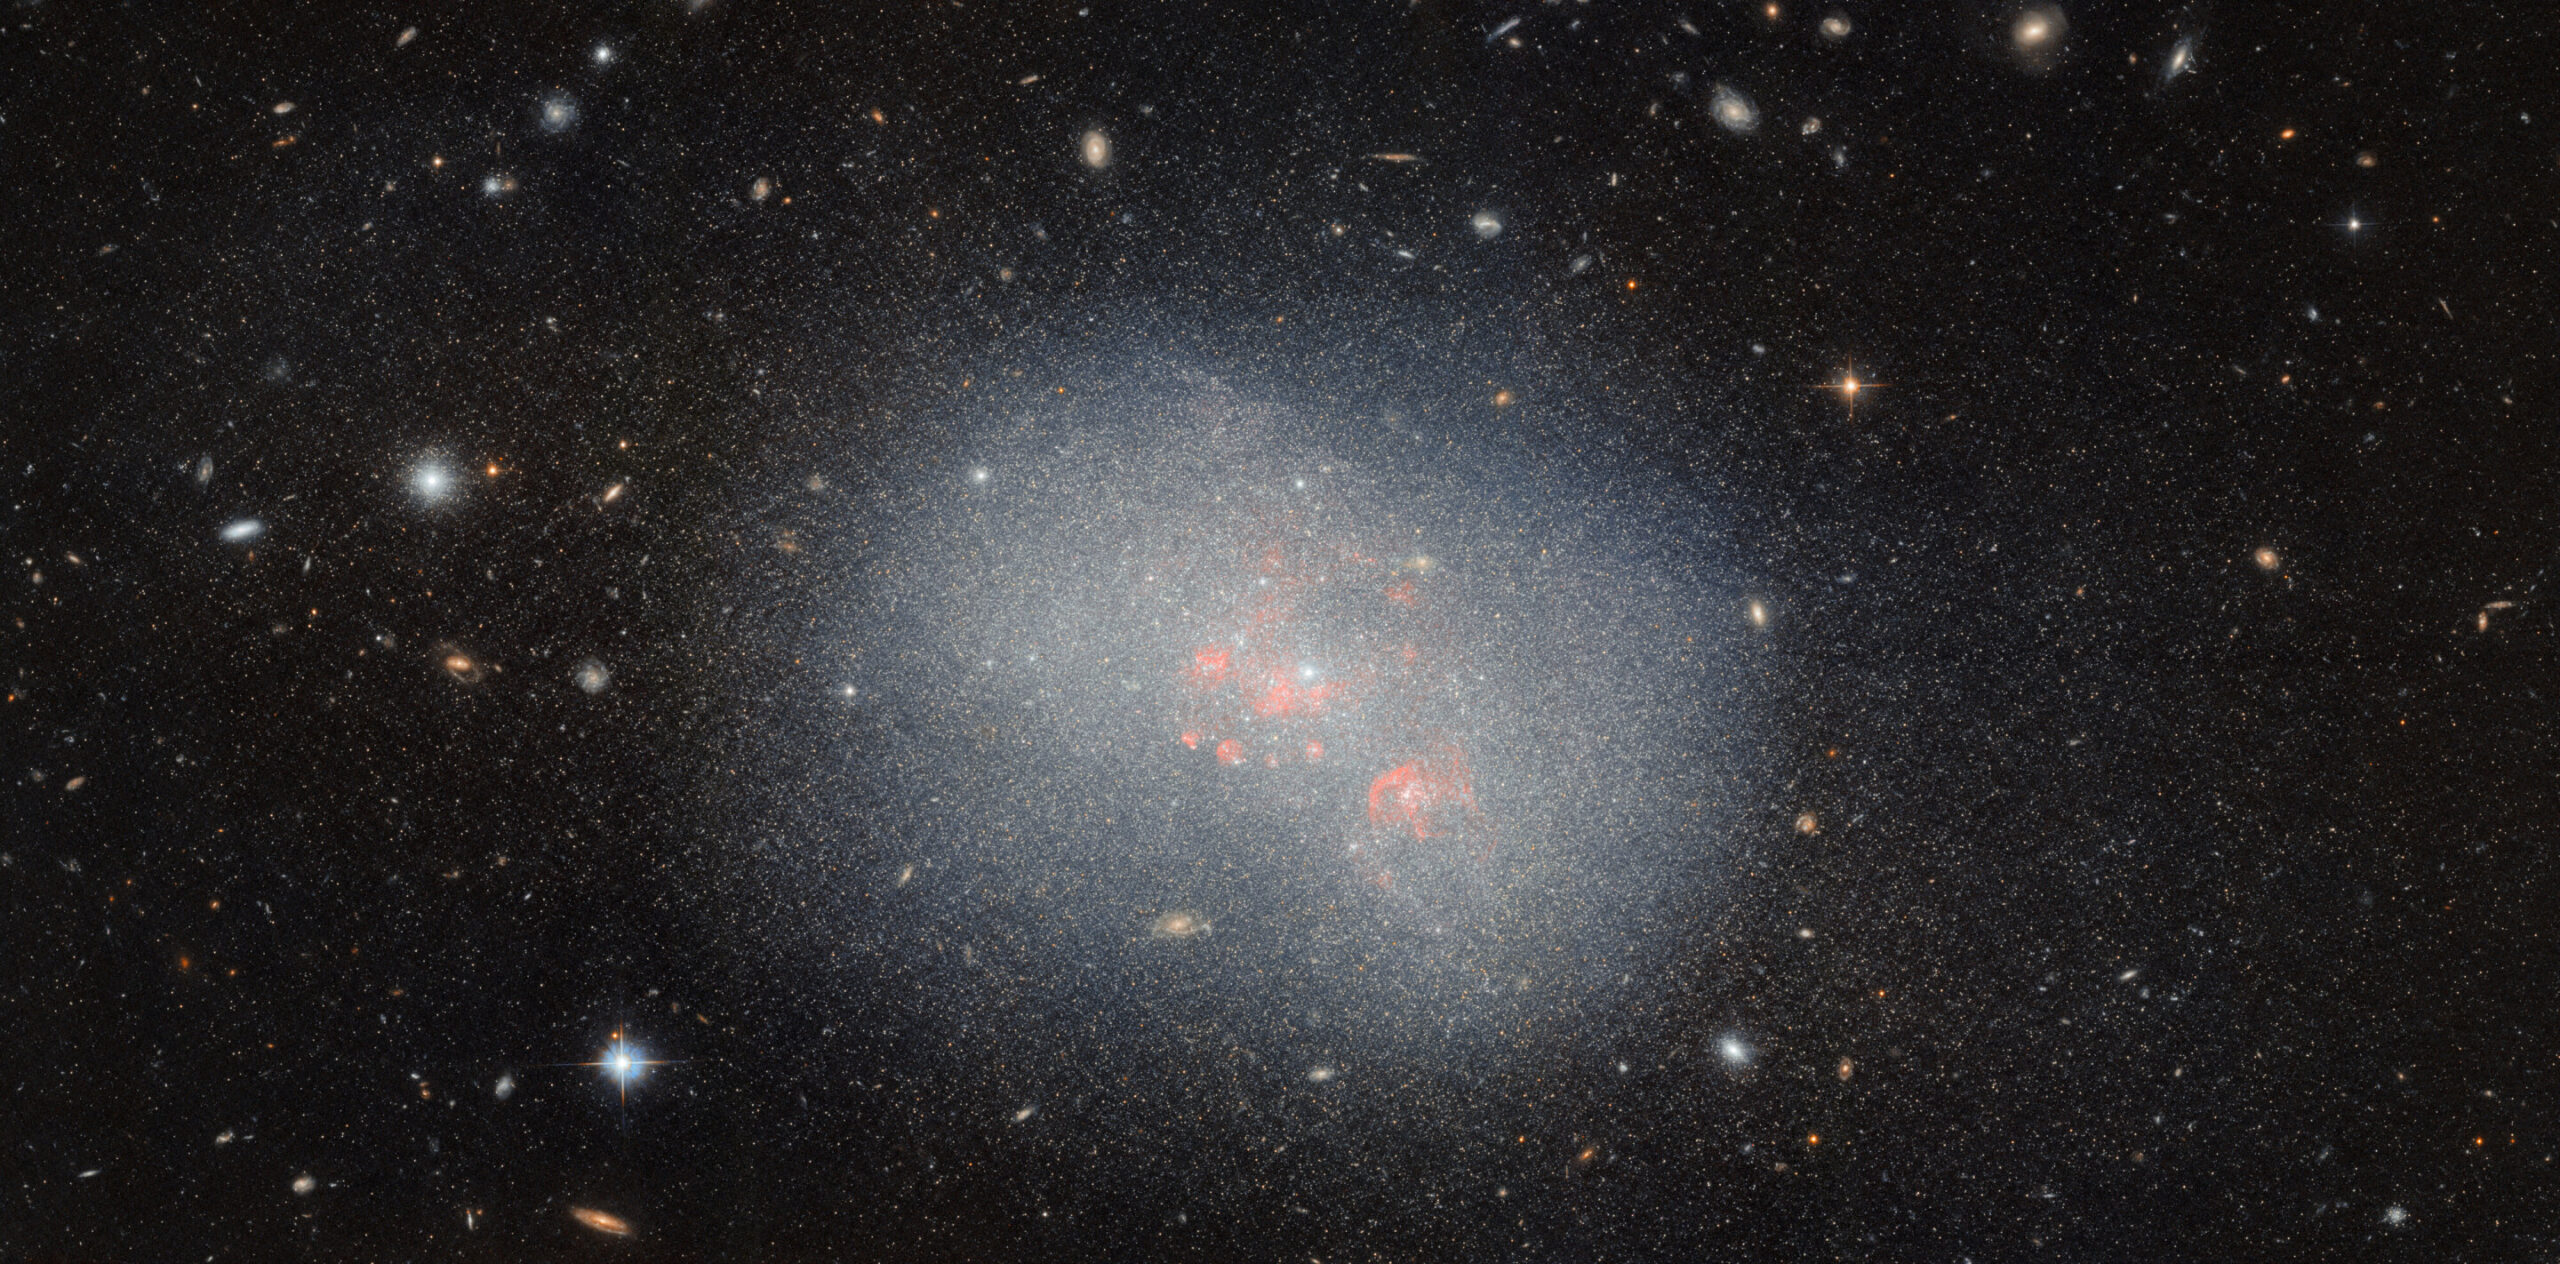 Ova slika Svemirskog teleskopa Hubble, projekta NASA-e i ESA-e, prikazuje patuljastu nepravilnu galaksiju NGC 5238. ESA/Hubble & NASA, F. Annibali.